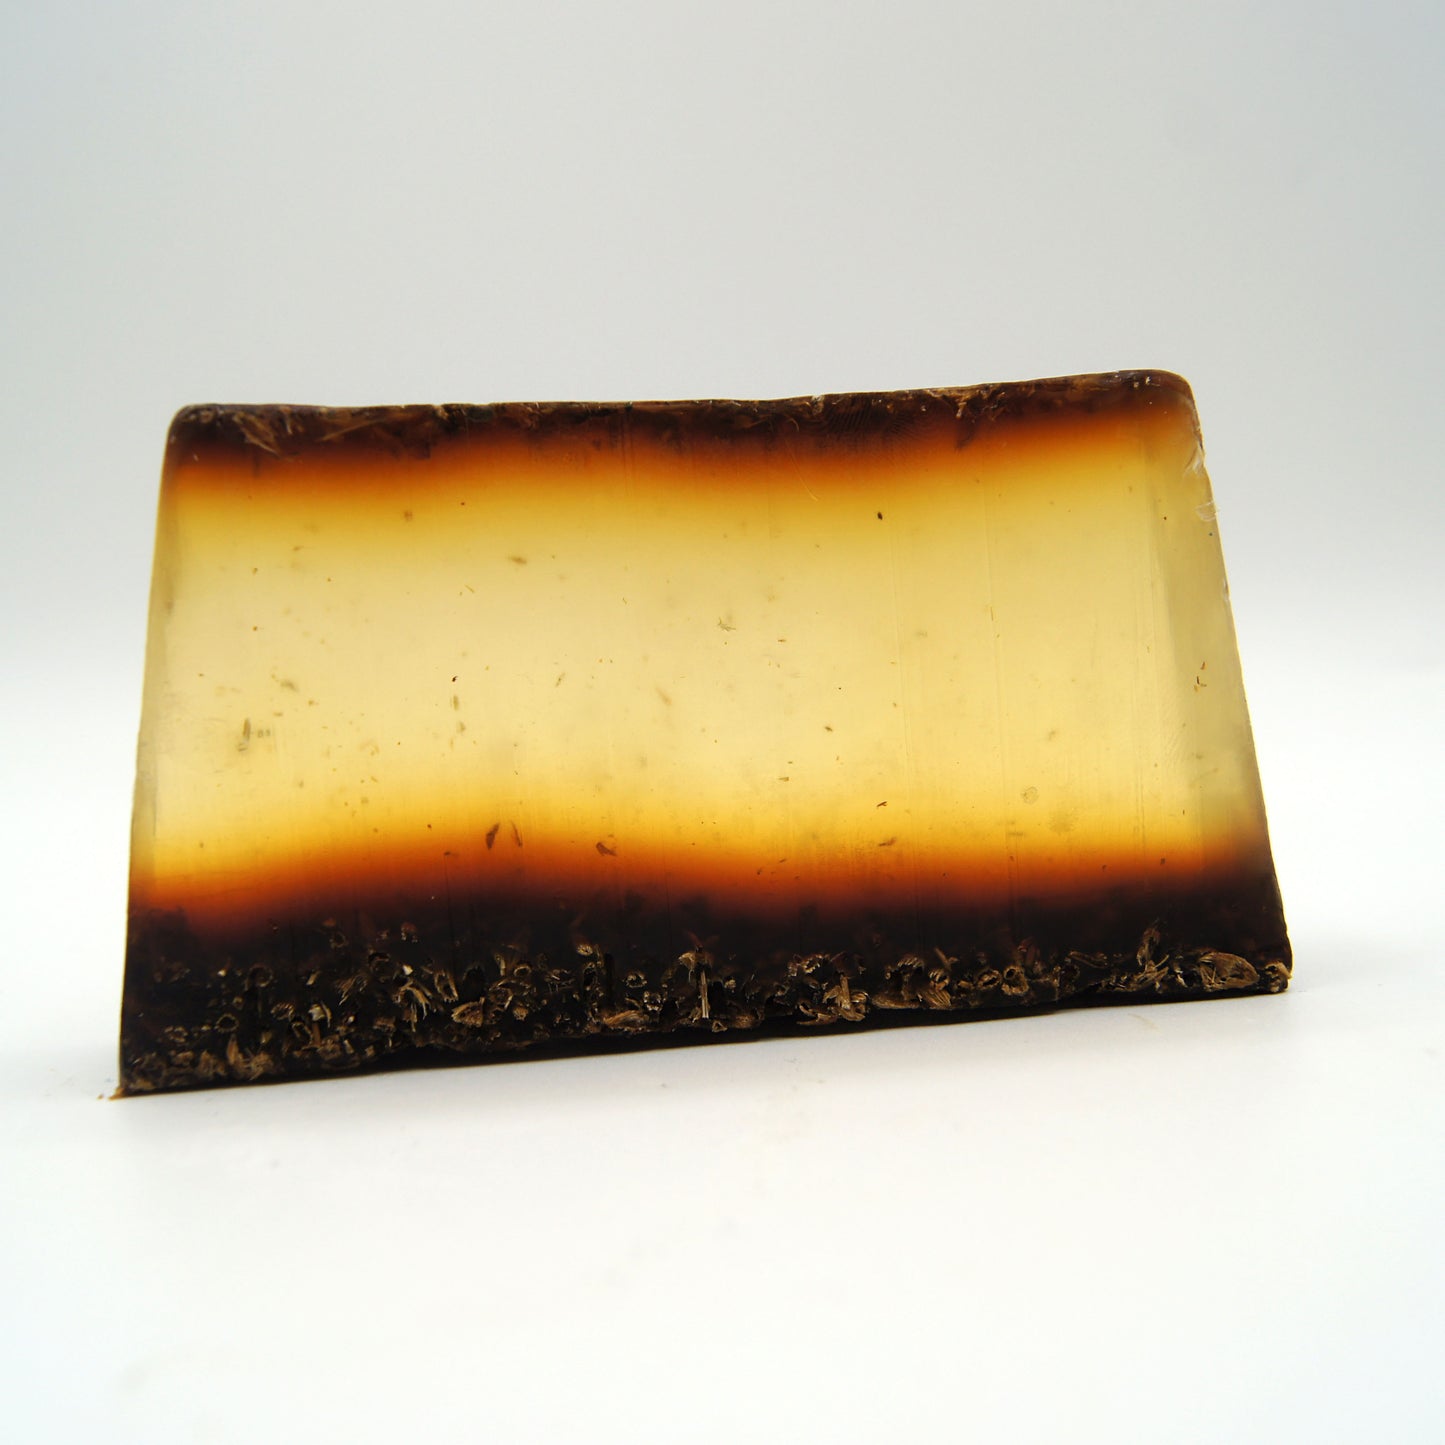 Sedbergh Soap Company Soap - 3 Fragrances